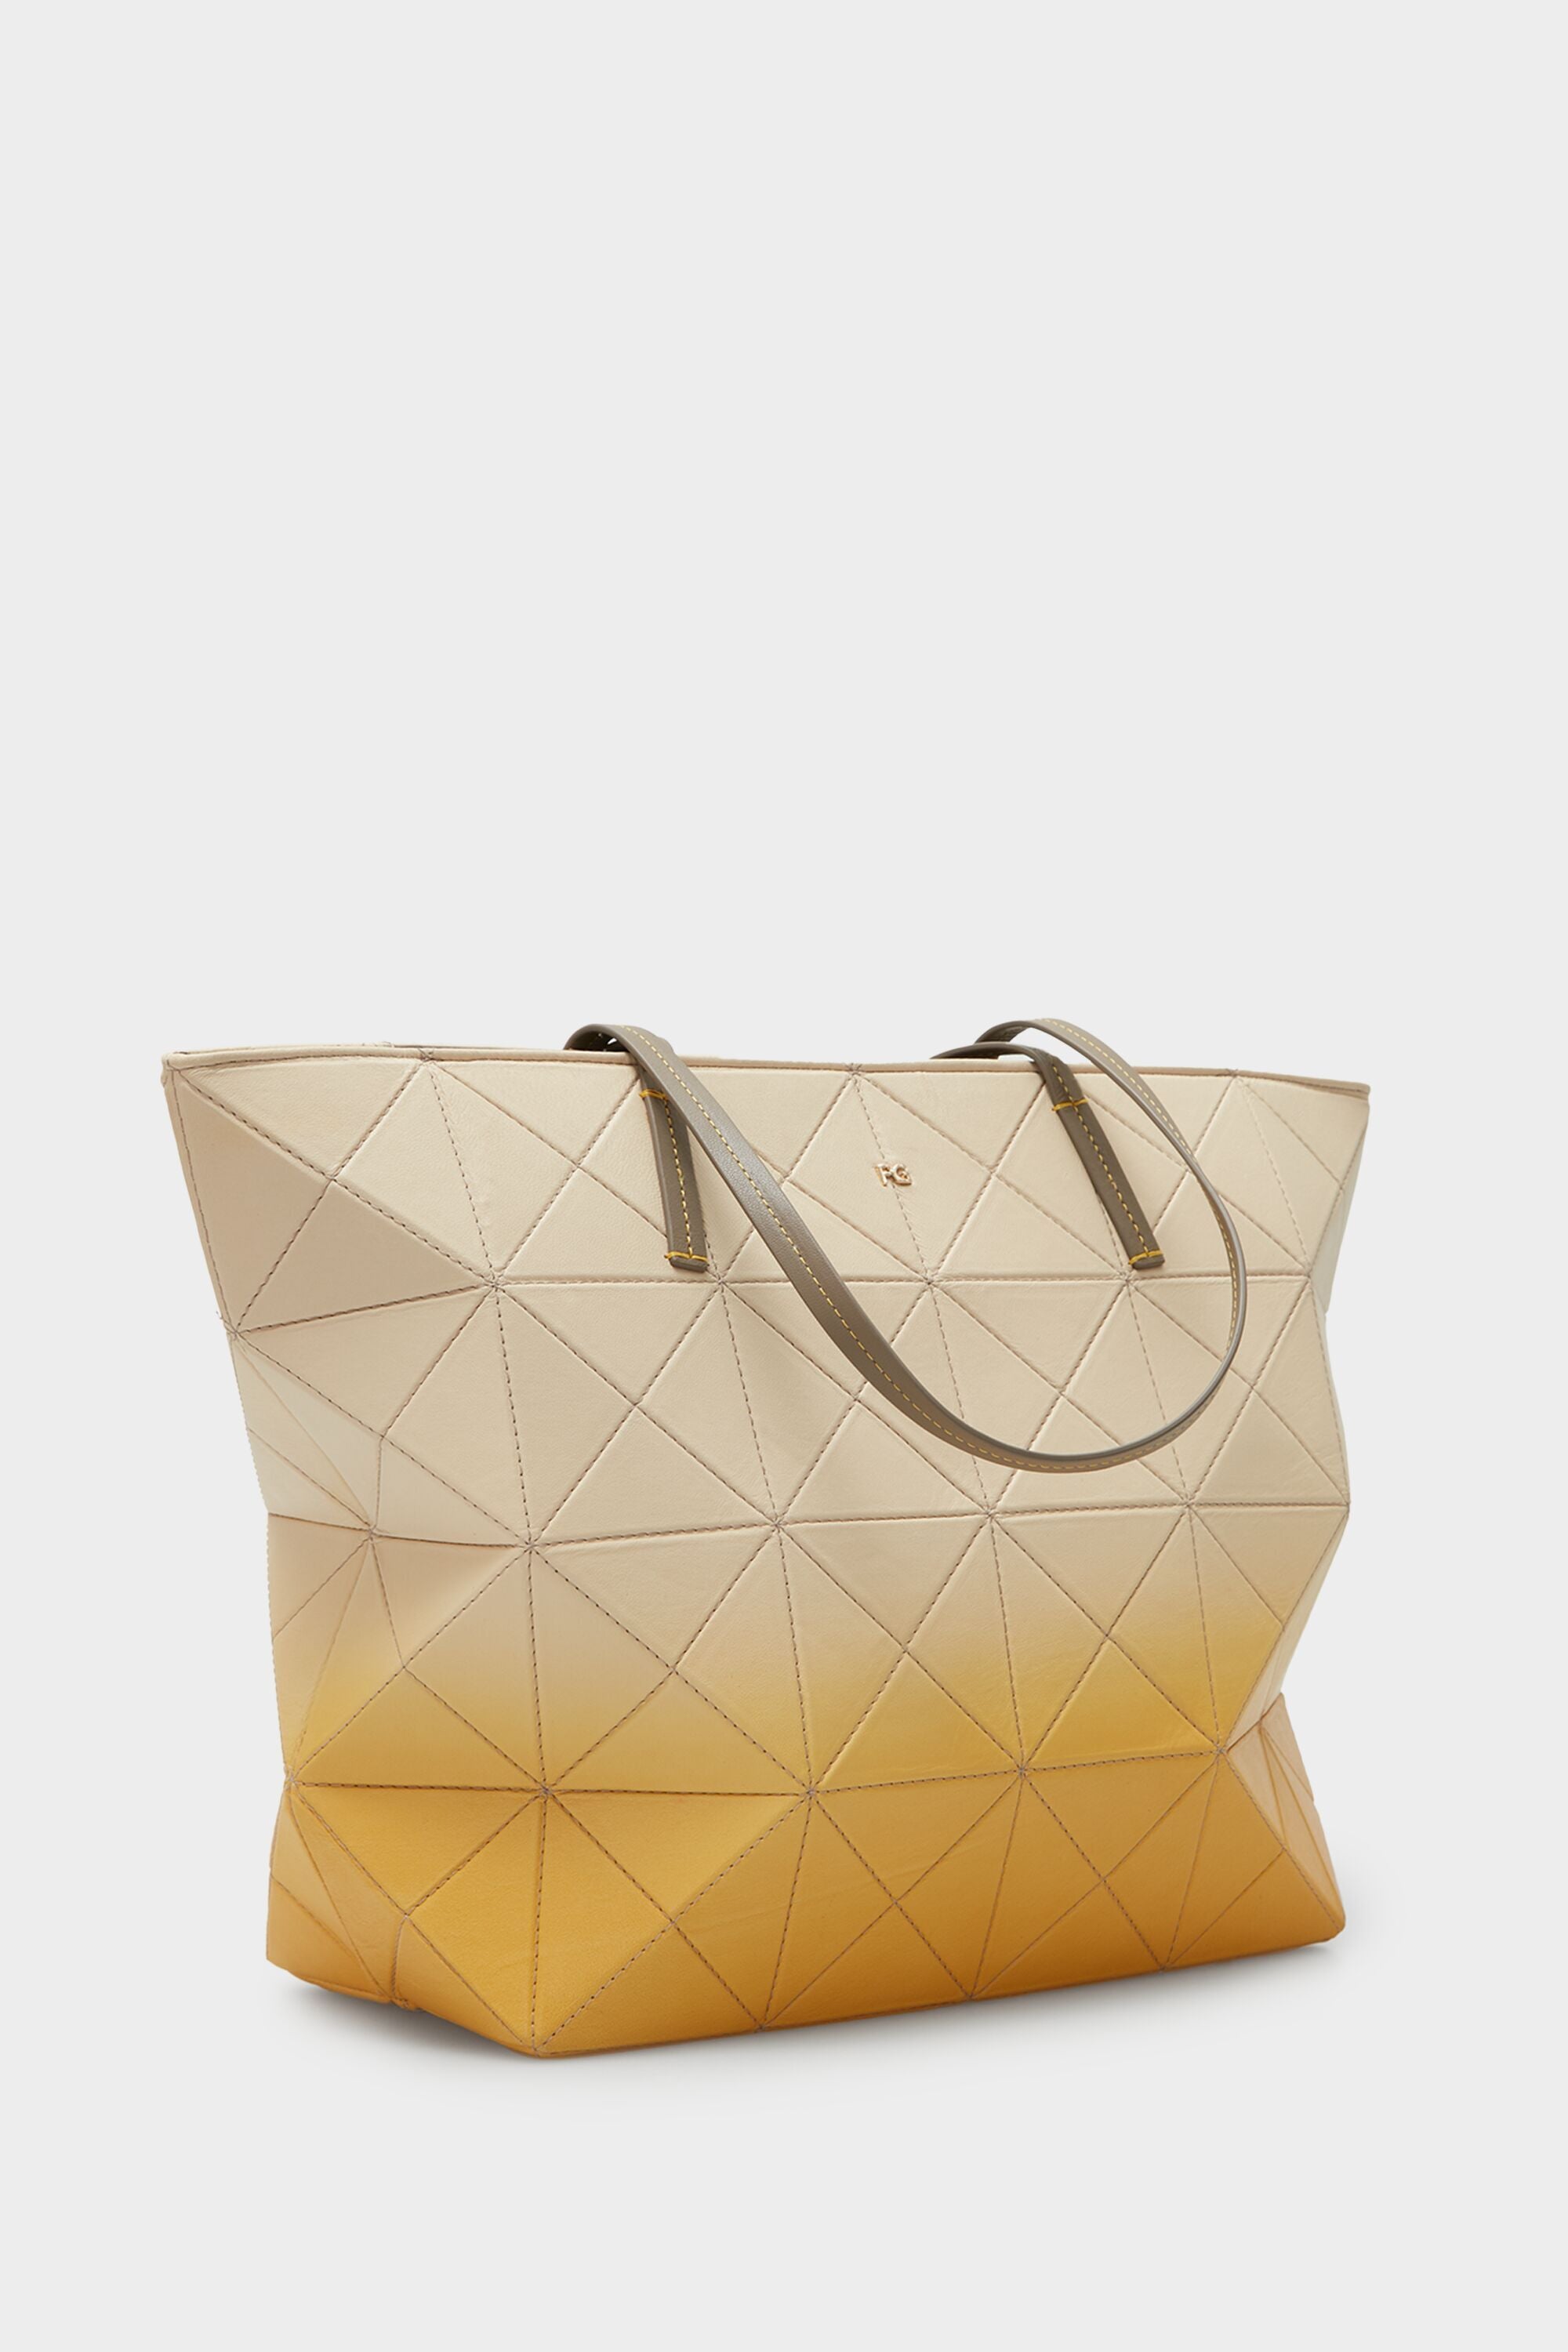 Origami zipped shoulder bag yellow - Purificacion Garcia Monaco